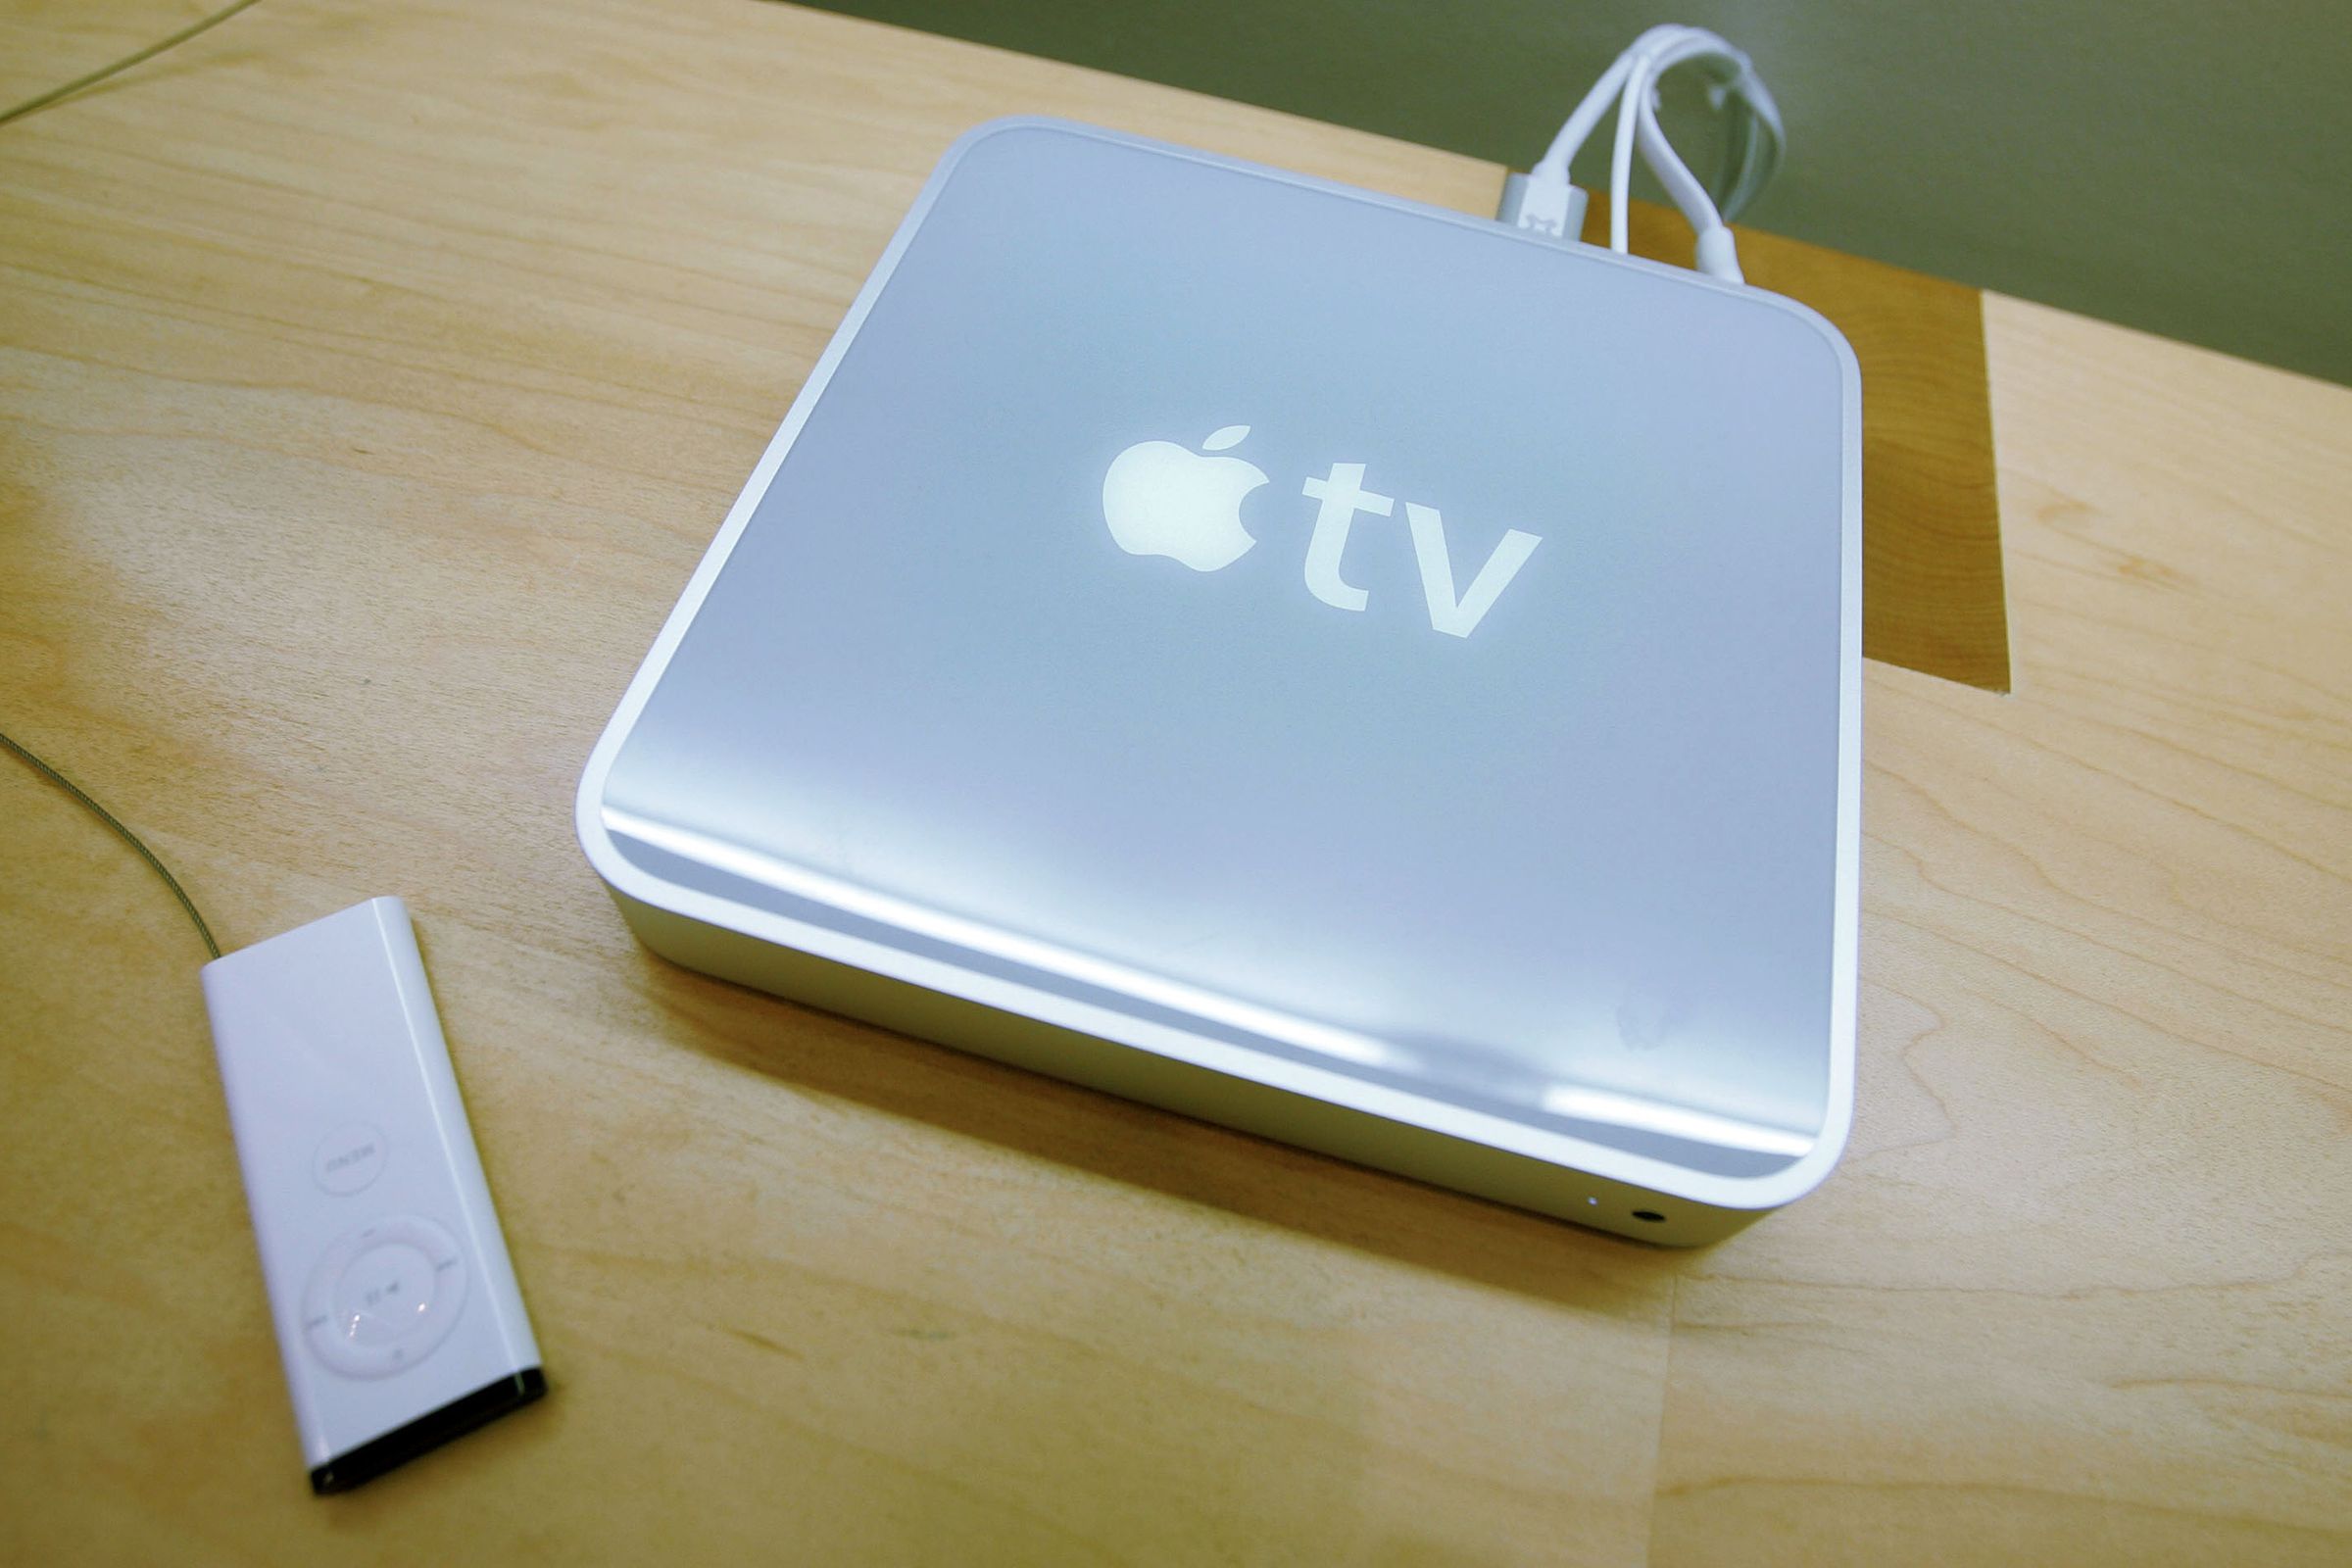 Apple TV Brings Digital Content To The Big Screen